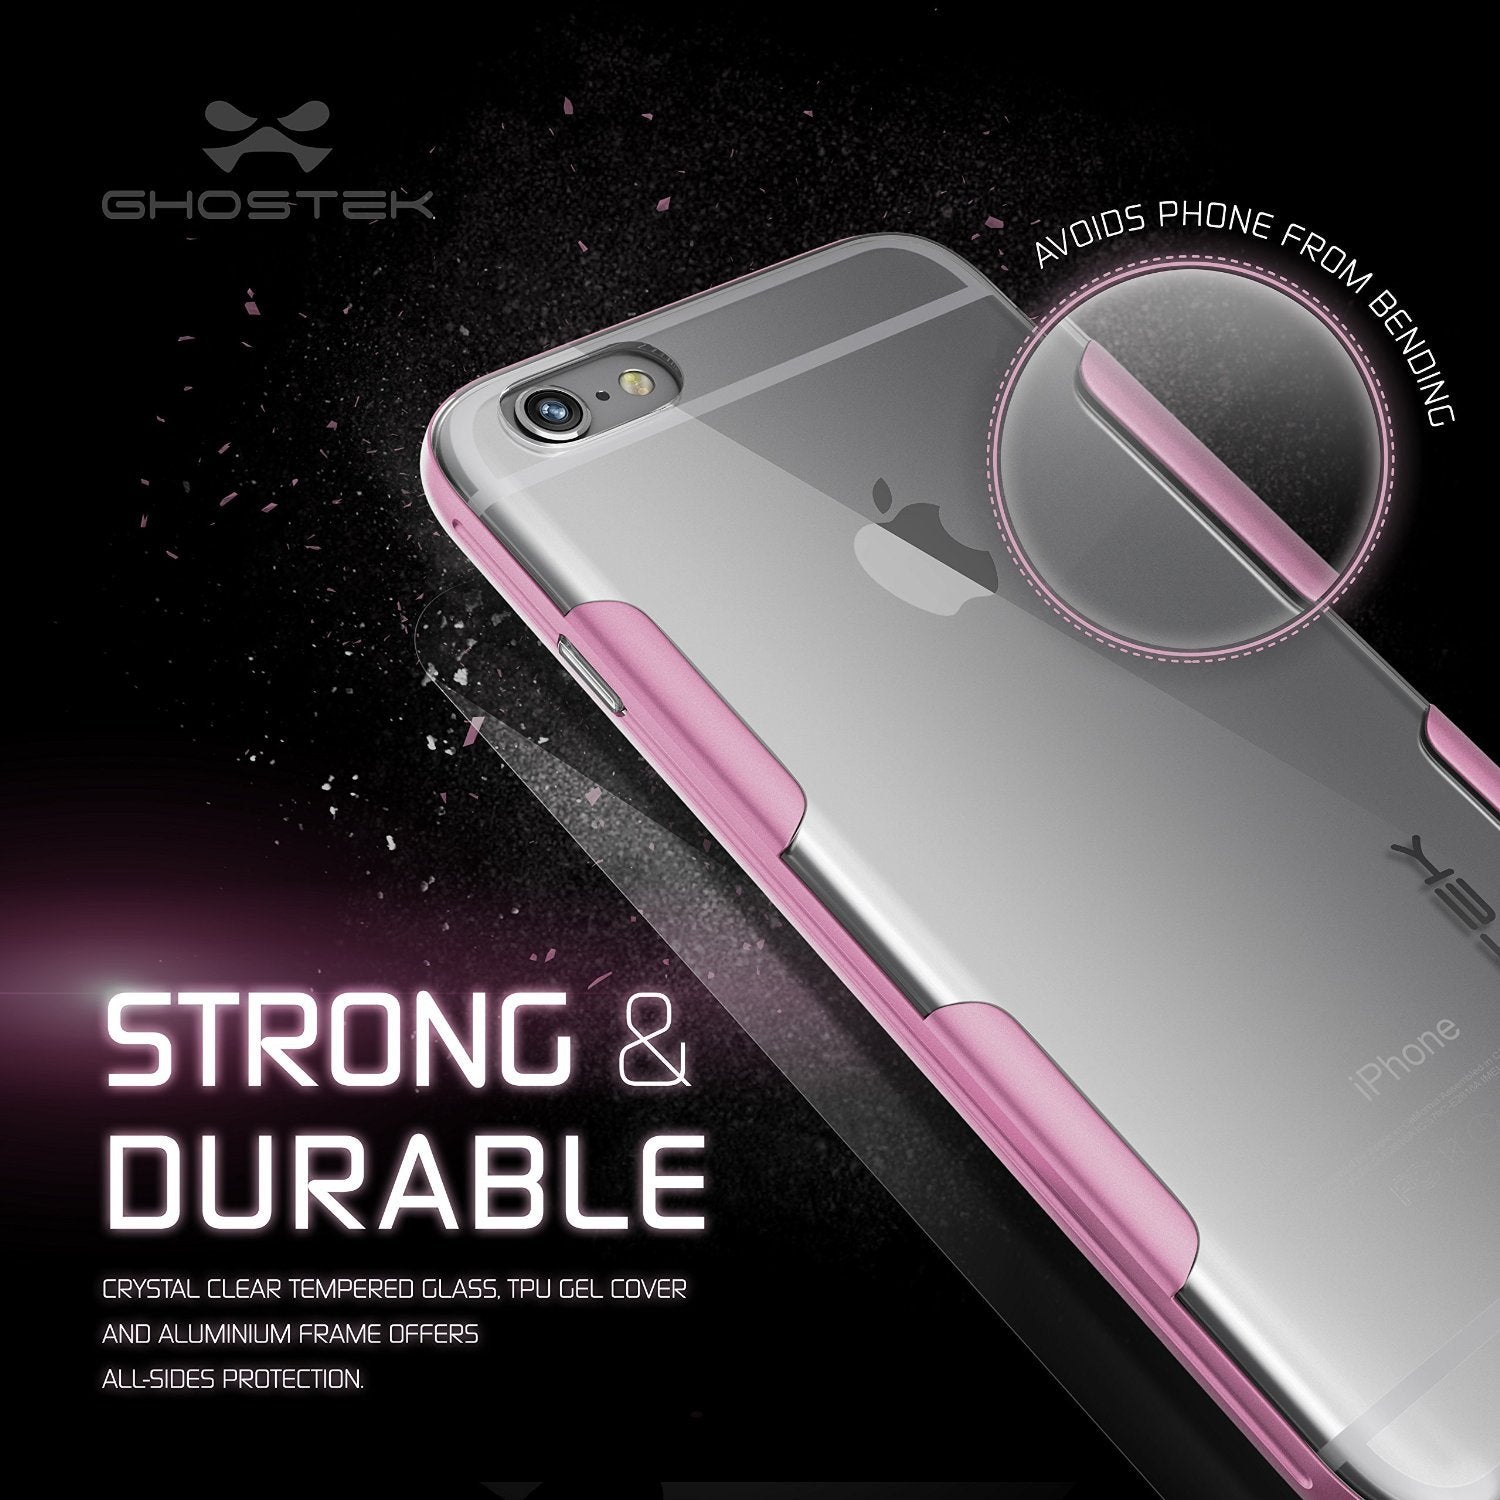 iPhone 6s Plus Case Pink Ghostek Cloak, Slim Protective Armor w/ Tempered Glass | Lifetime Warranty - PunkCase NZ